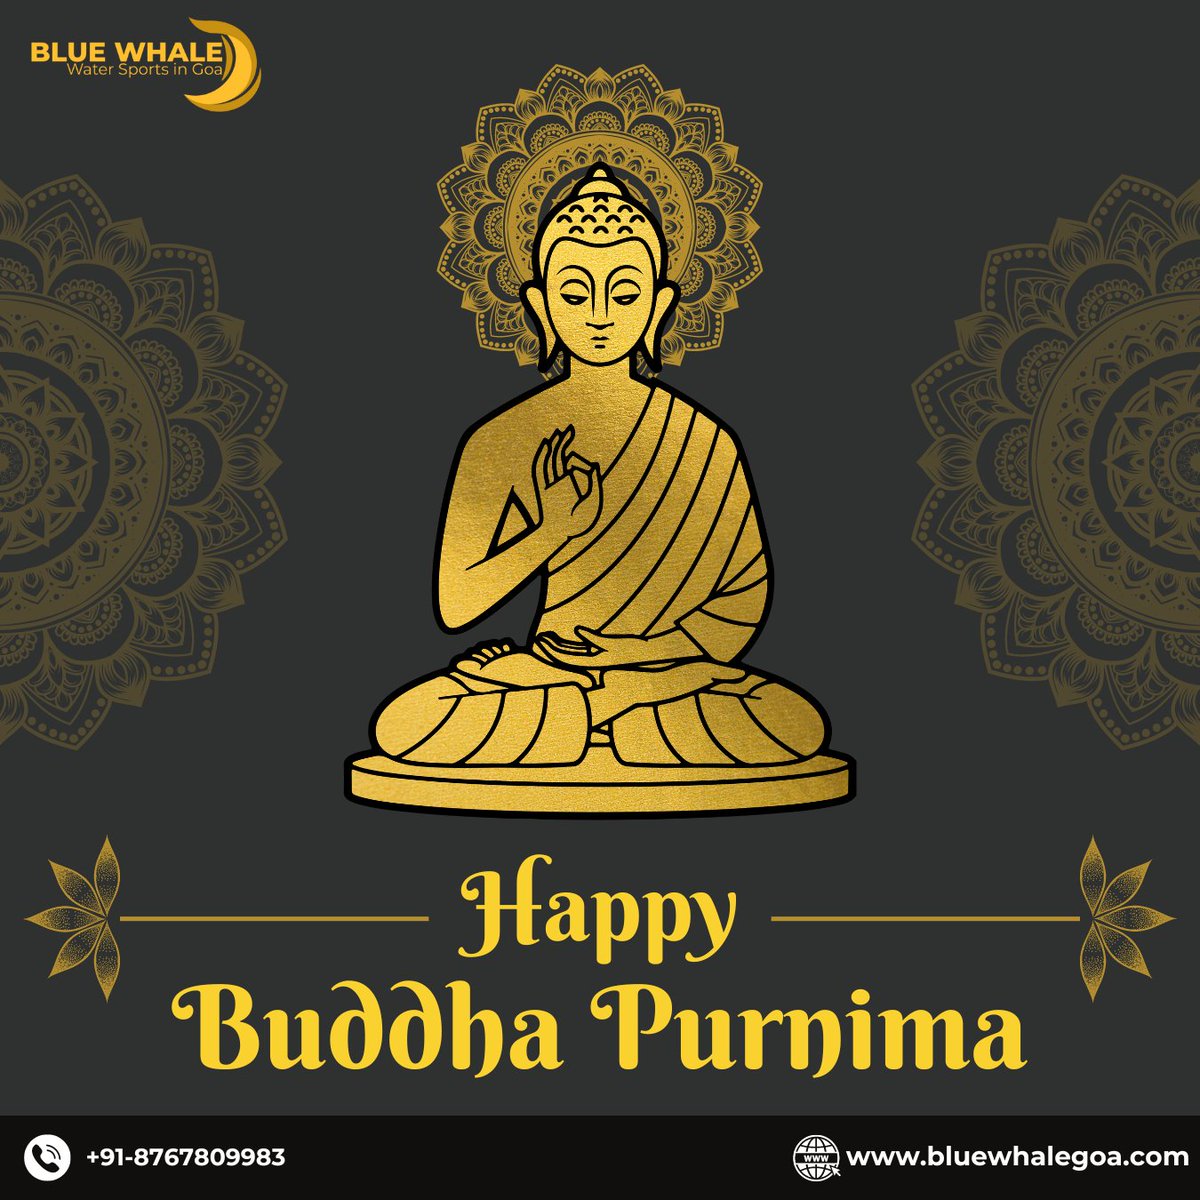 Happy Buddha Purnima! May the light of wisdom illuminate your path. Wishing you peace and harmony from Blue Whale Goa. 🌕🙏 #BuddhaPurnima #BlueWhaleGoa